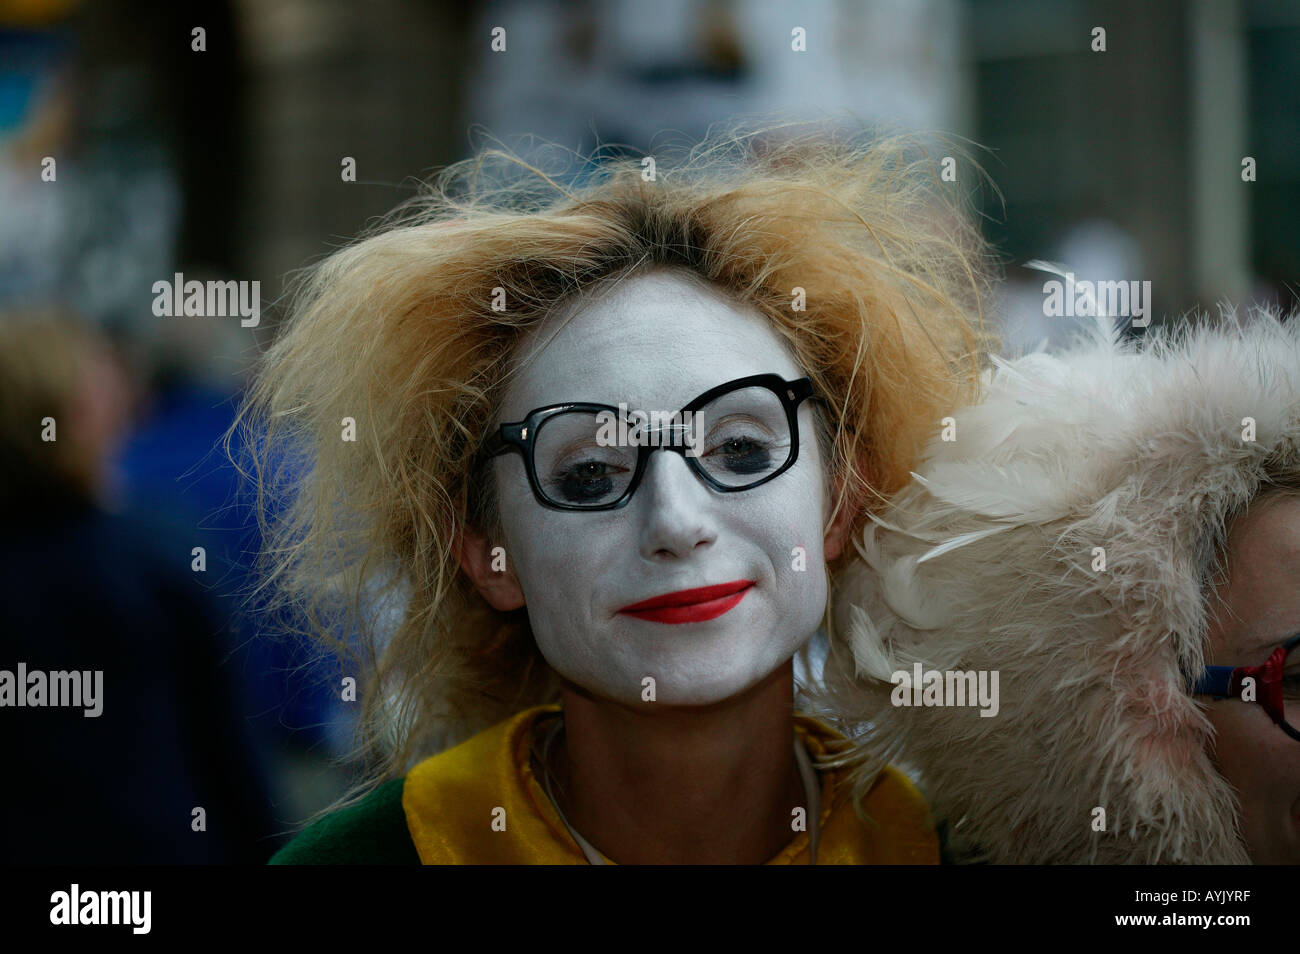 Female in clown make-up with comical glasses staring, Edinburgh Fringe Festival Scotland Stock Photo